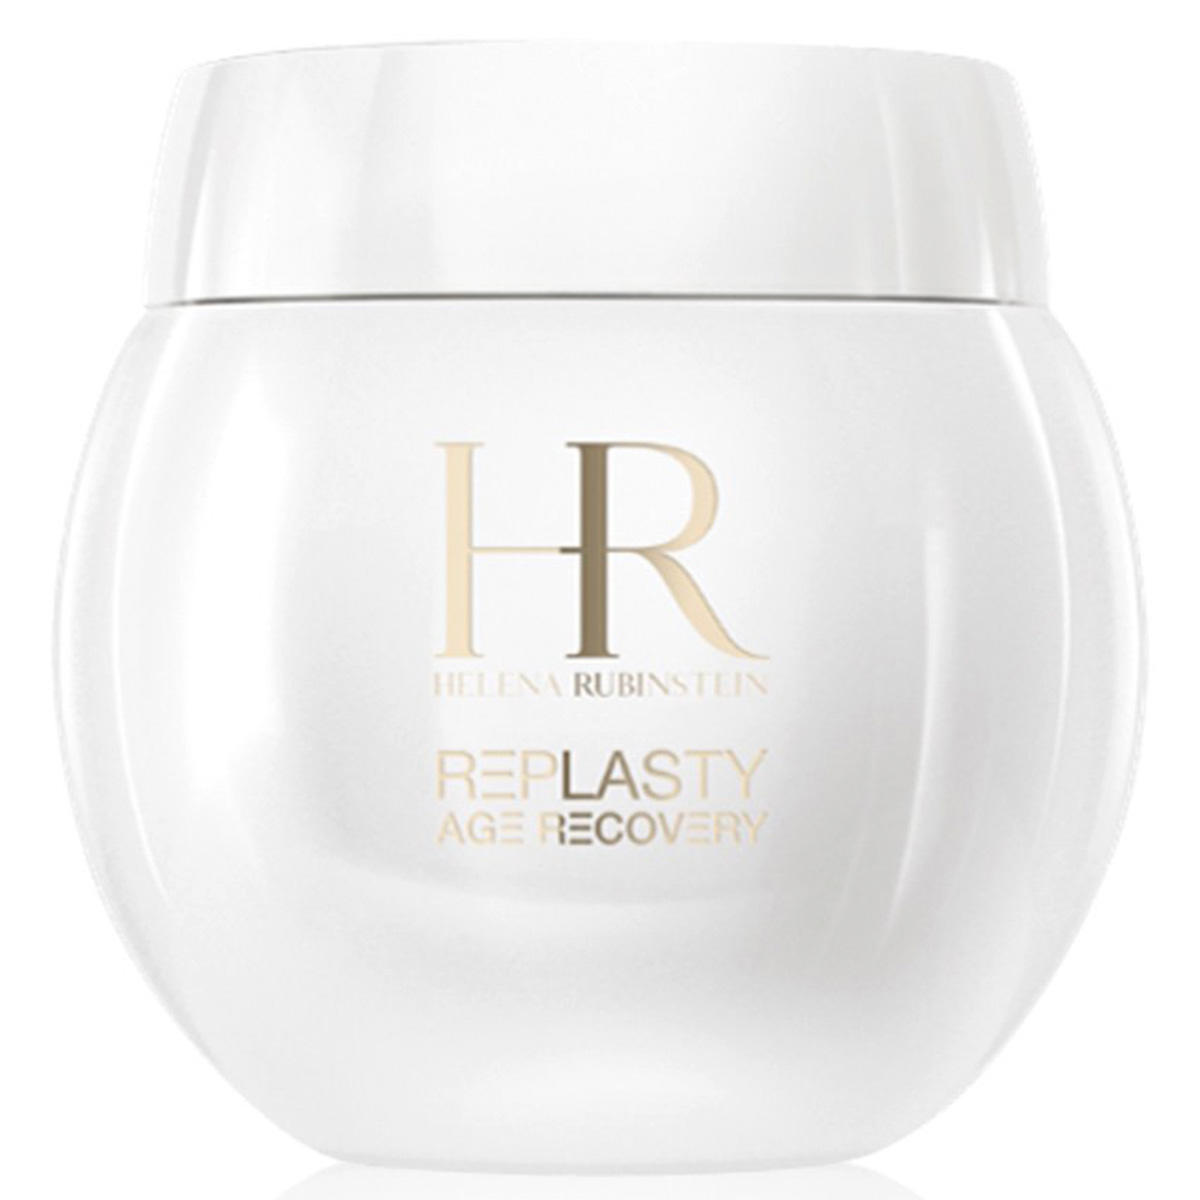 Helena Rubinstein Re-PLASTY Age Recovery Day Cream  100 ml - 1